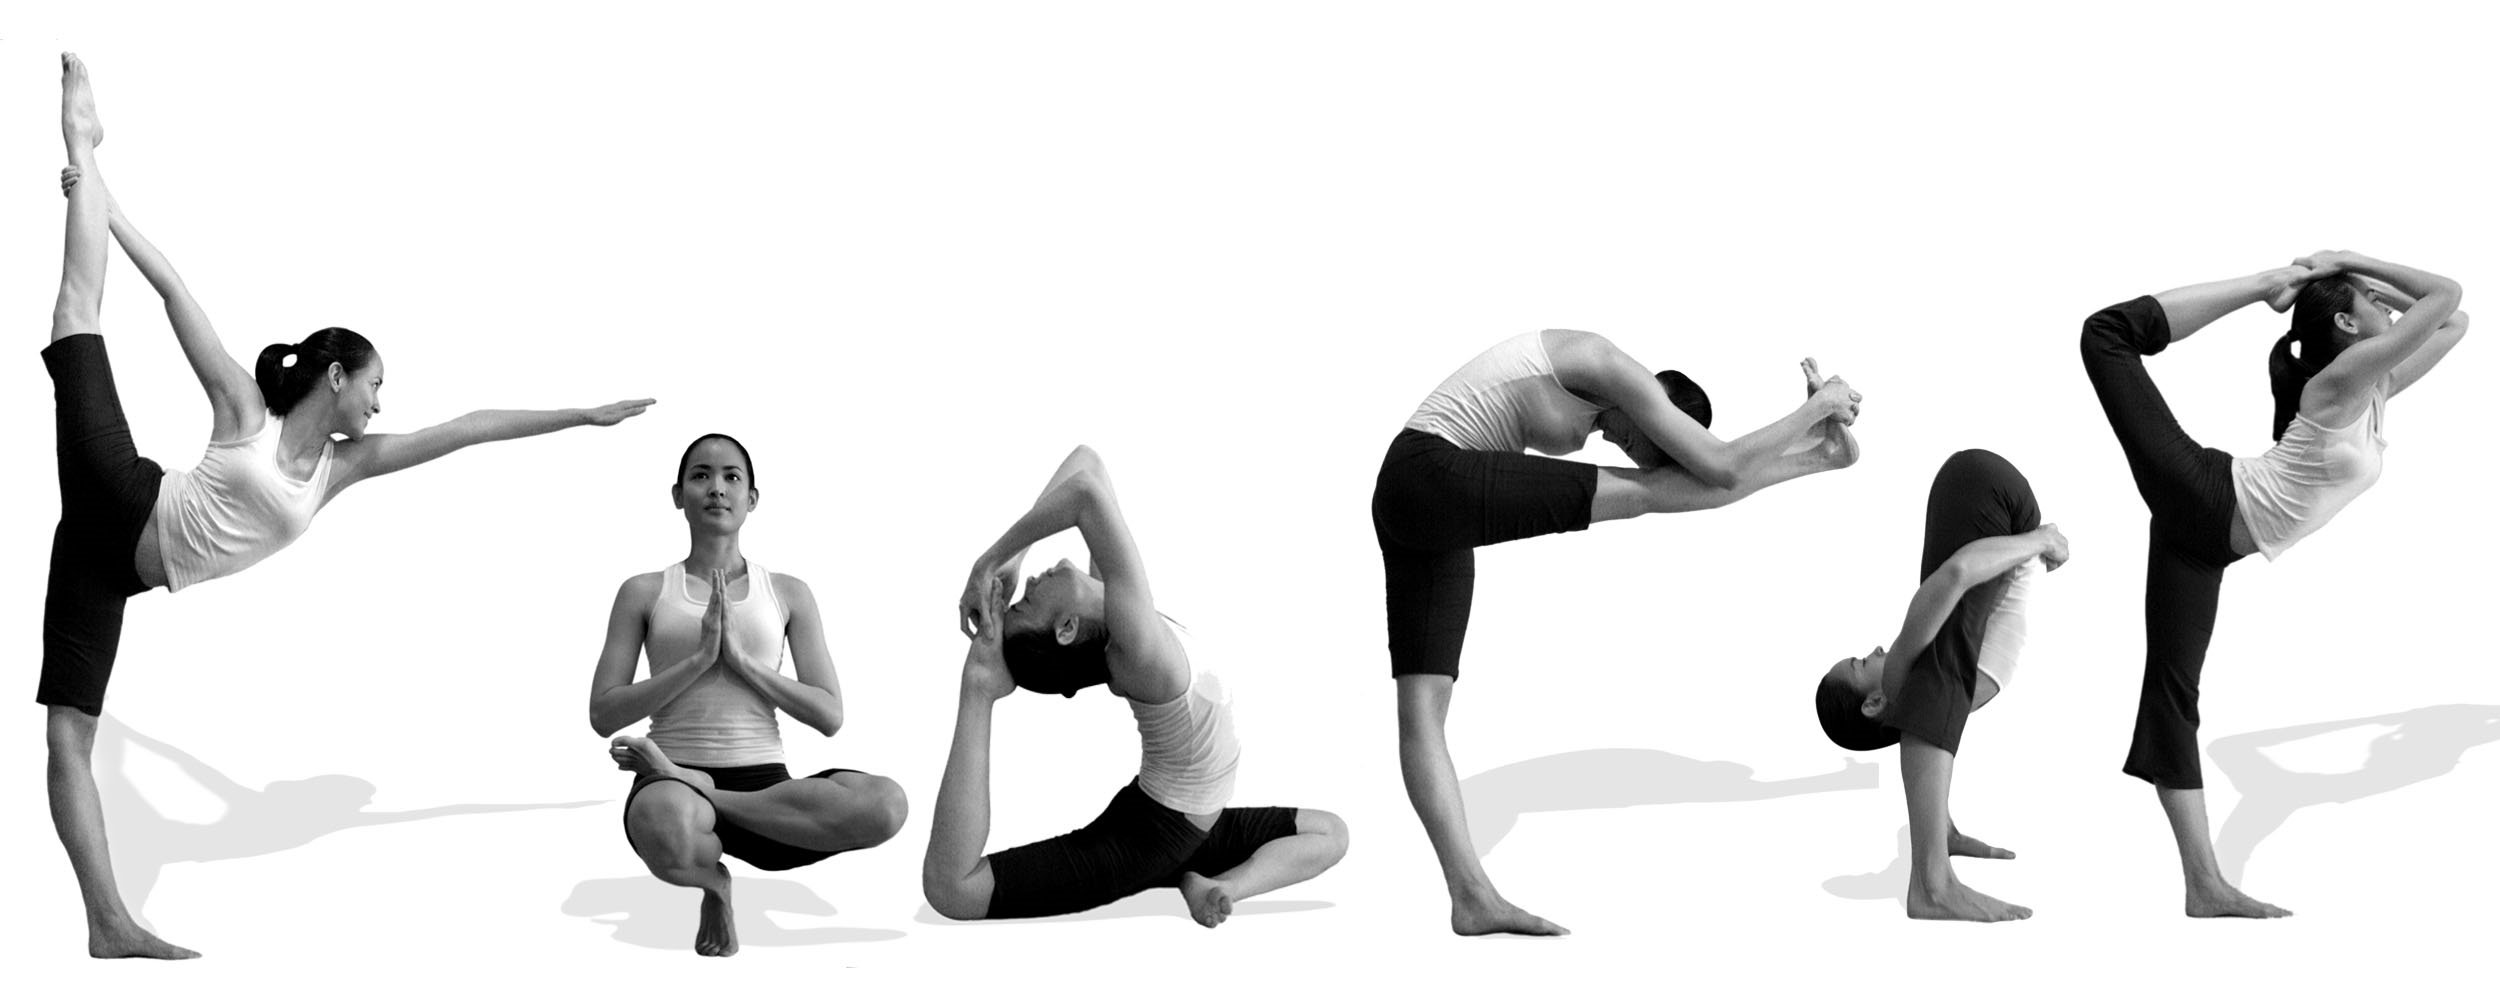 http://drypchauhan.files.wordpress.com/2012/10/yoga.jpg